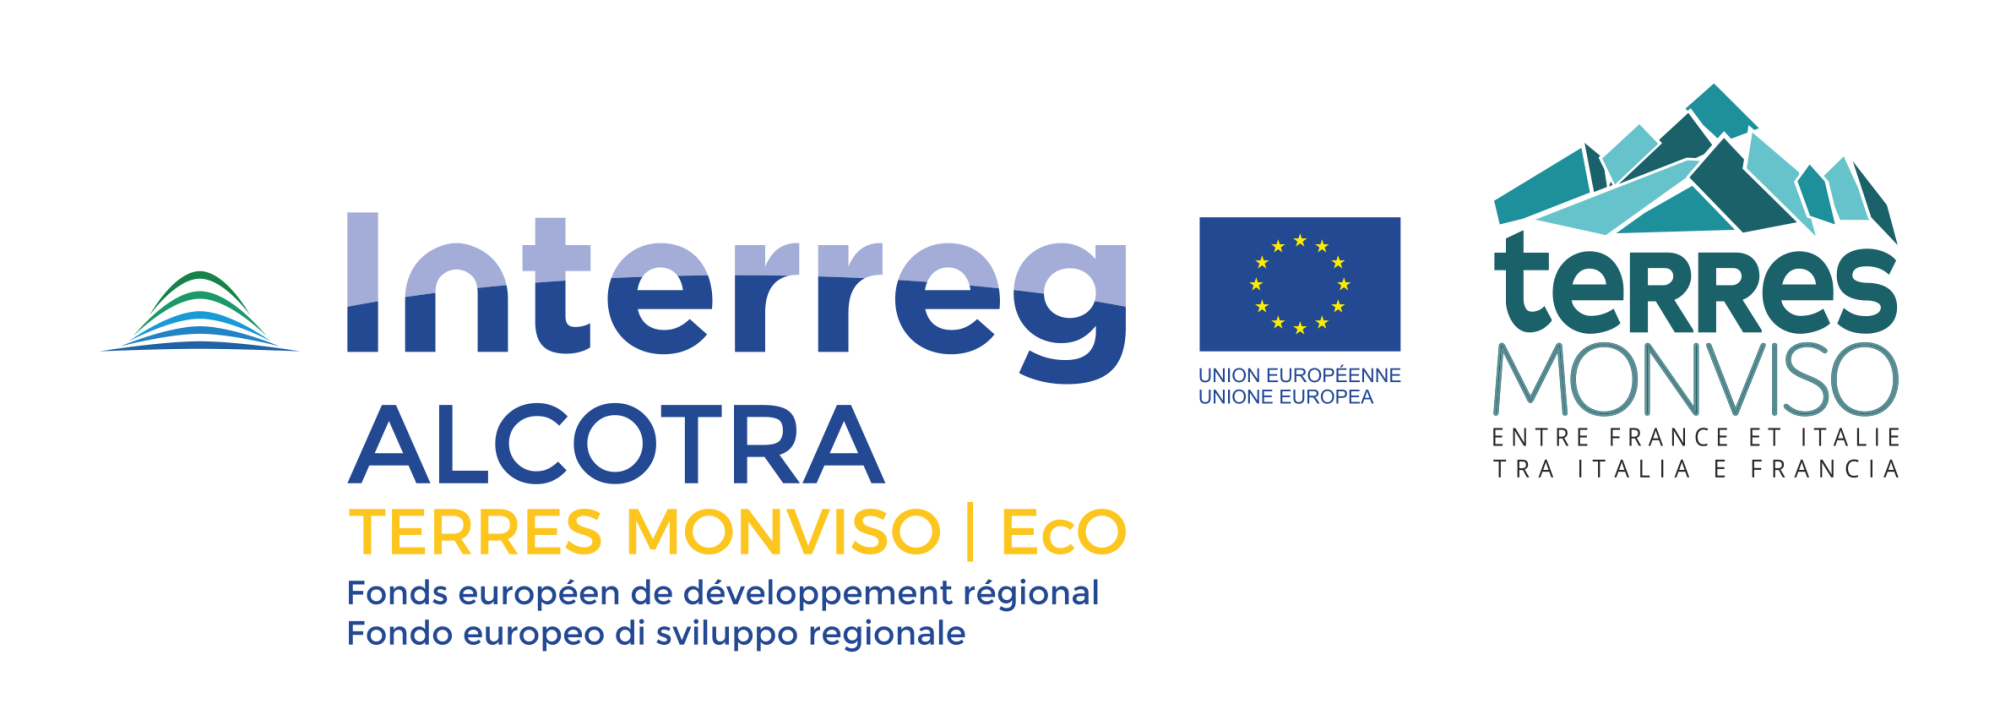 Bandeau logos Interreg Alcotra Monviso